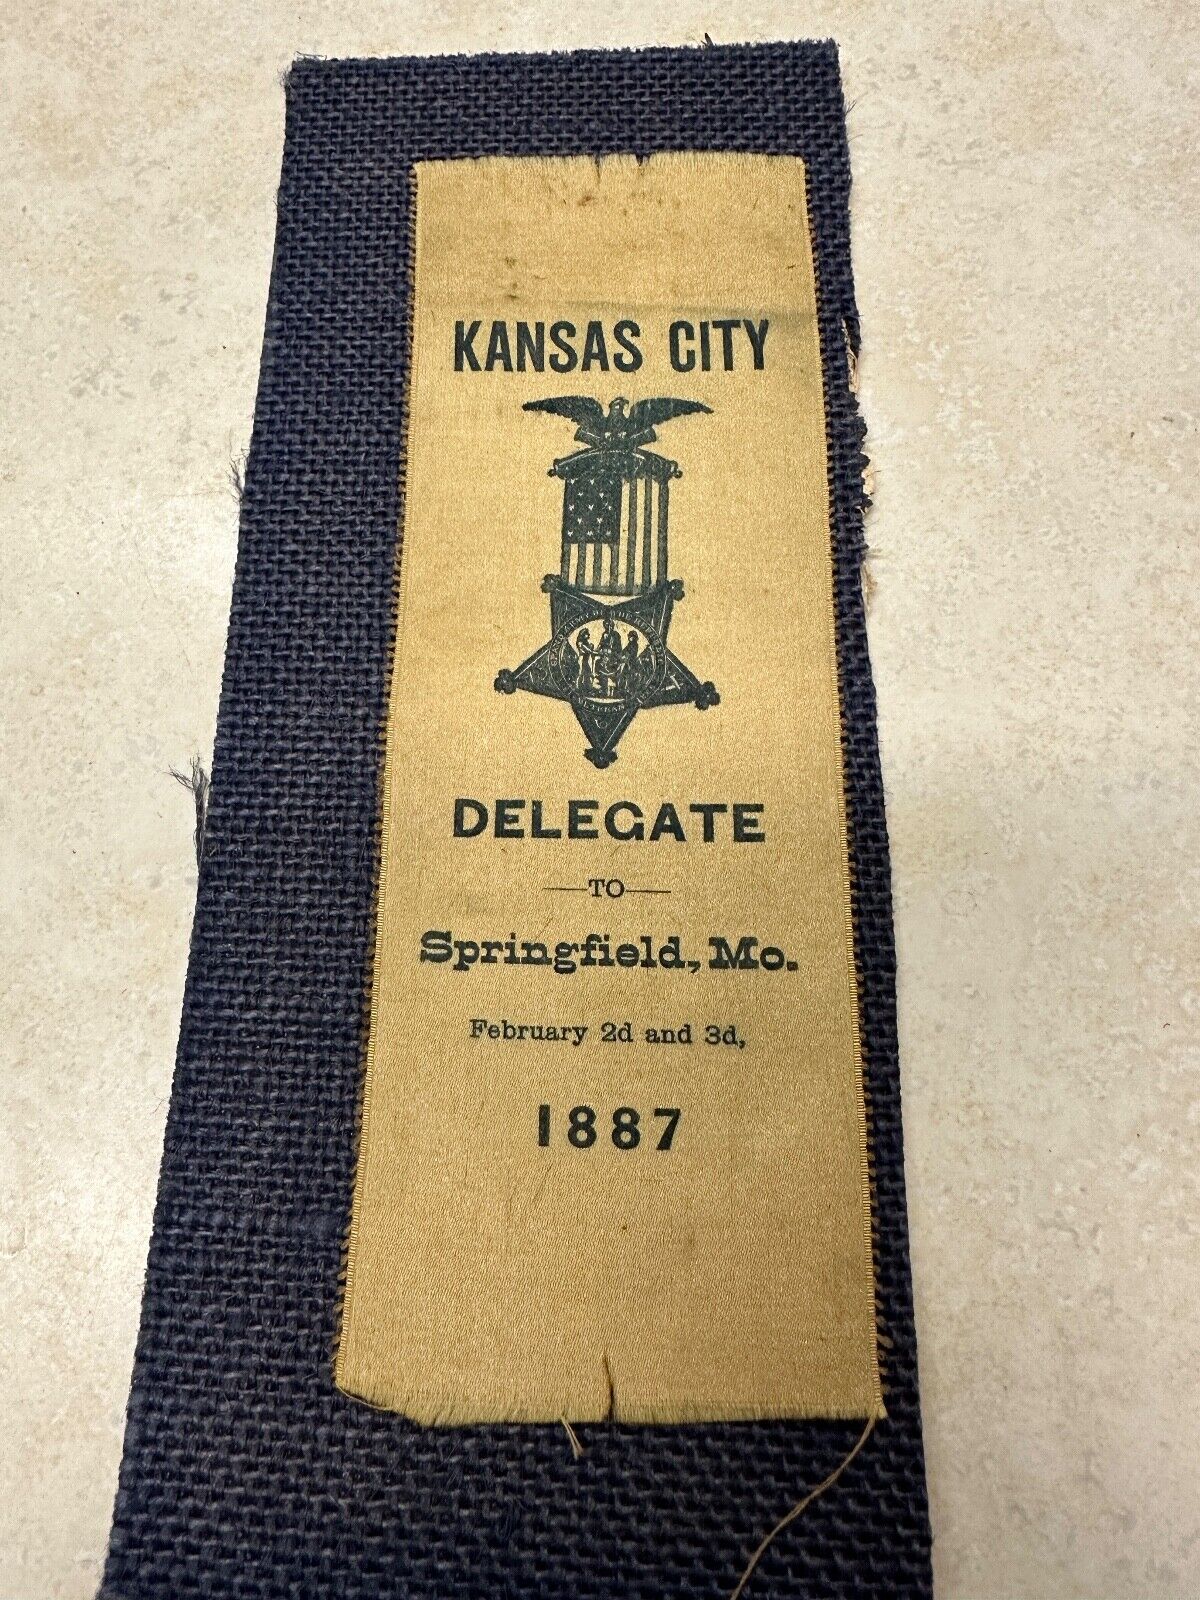 1887 Kansas City Delegate to Springfield Missouri GAR Reunion